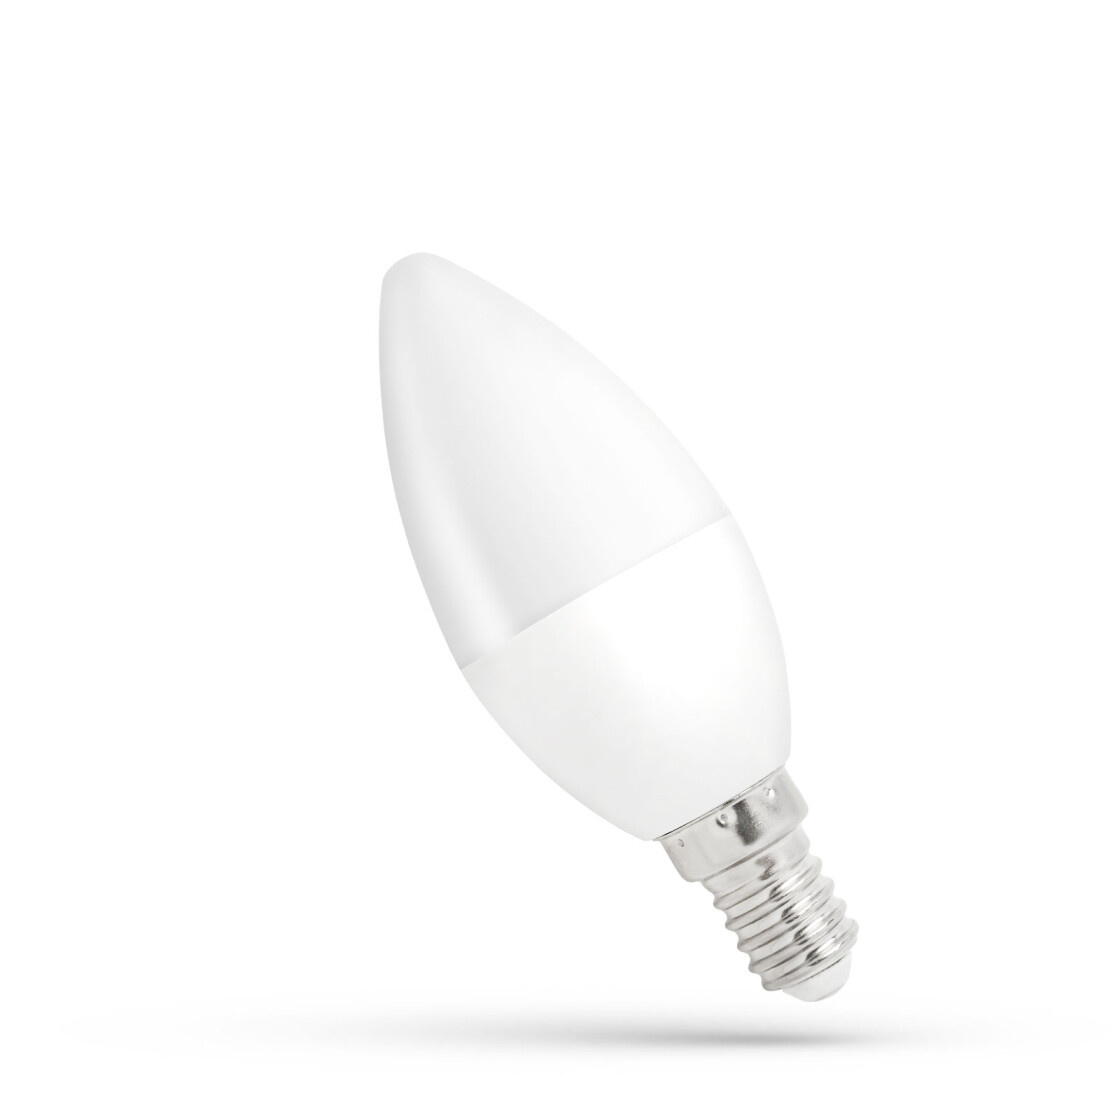 annuleren Besmettelijke ziekte Goed gevoel LED lamp E14 - C37 1W vervangt 10W - 6000K daglicht wit -  Ledlichtdiscounter.nl